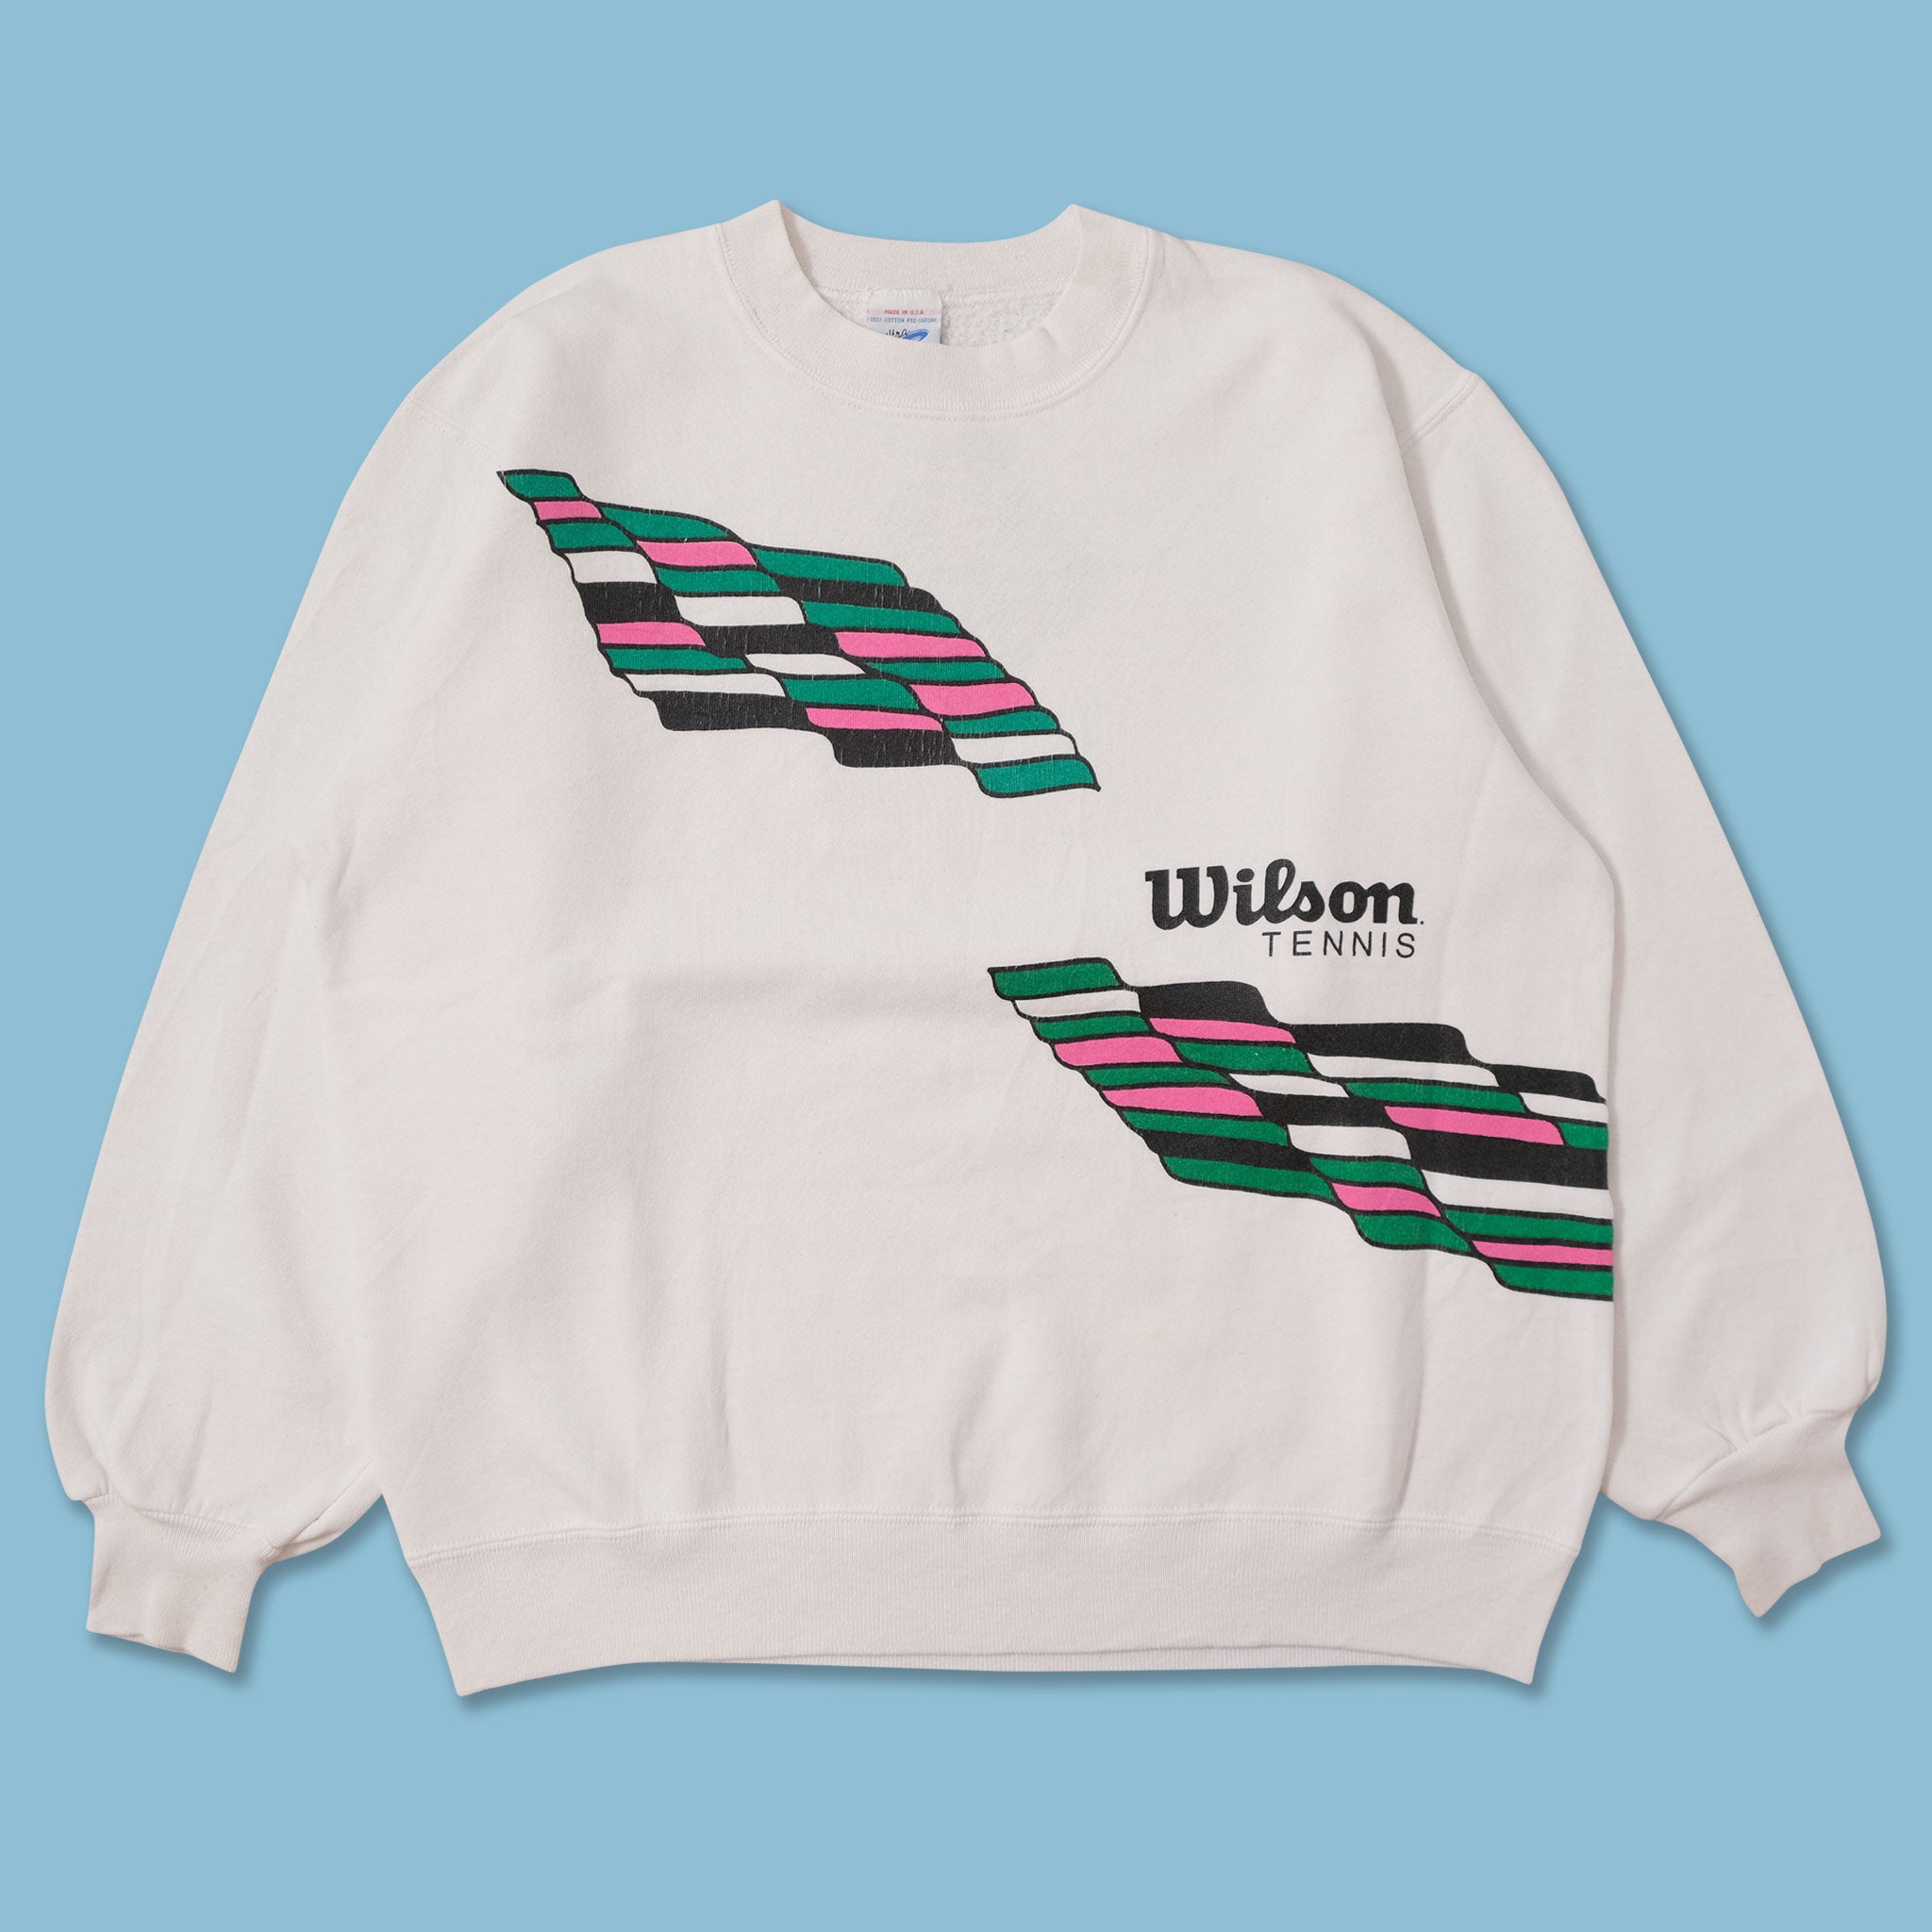 Vintage 1990s Wilson Athletic Wear Crewneck Sweatshirt / 90s